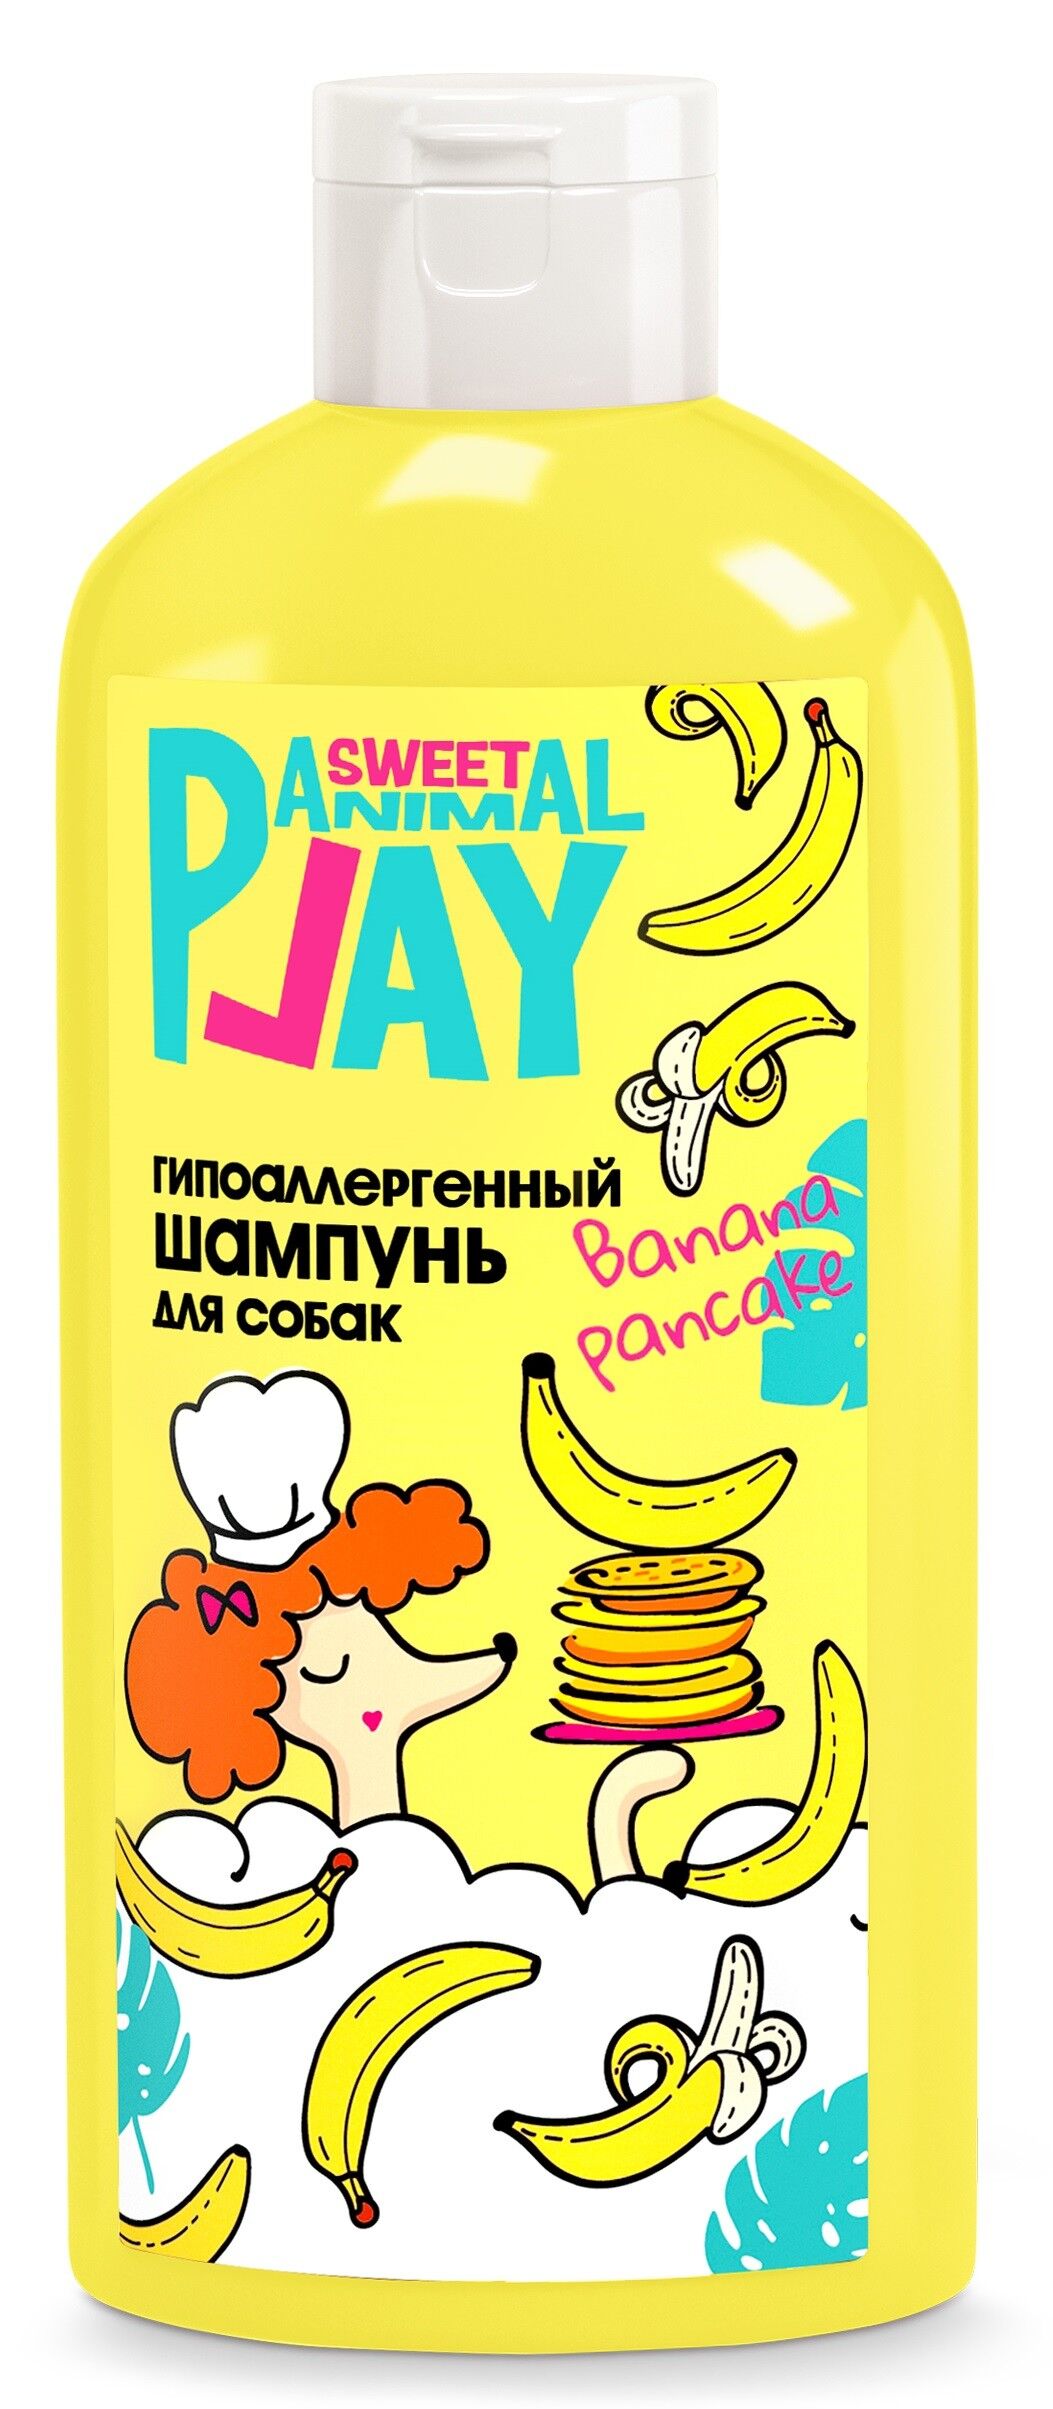 Animal Play sweet Шампунь д/собак гипоаллерг.Банановый панкейк 300мл